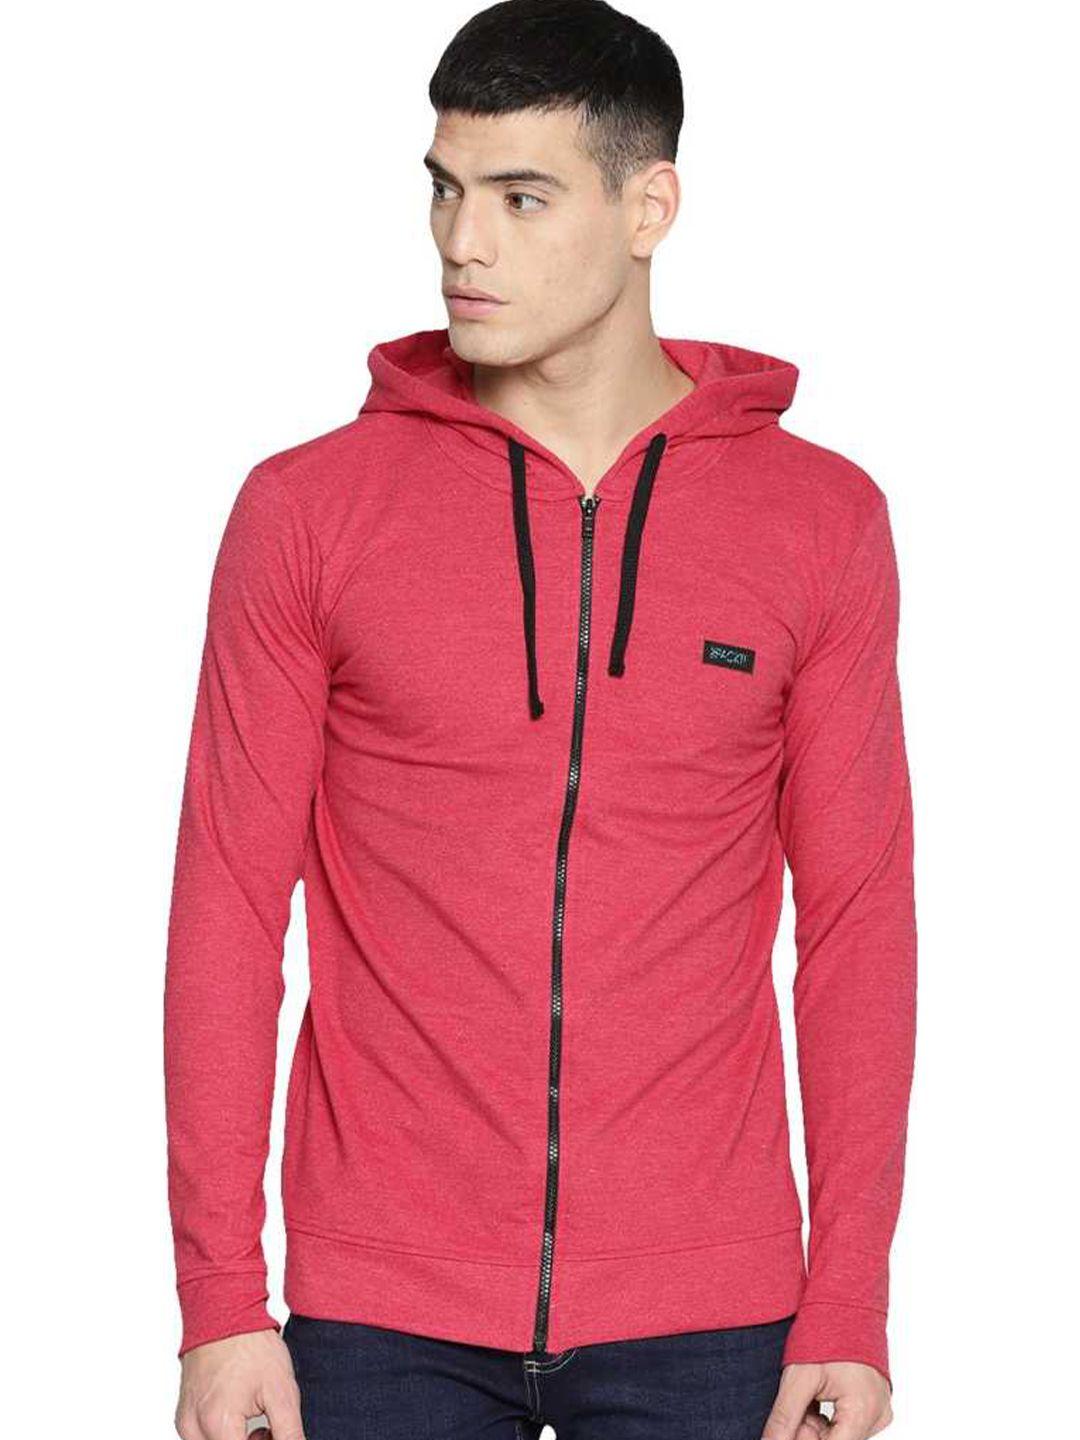 impackt-men-red-hooded-cotton-sweatshirt